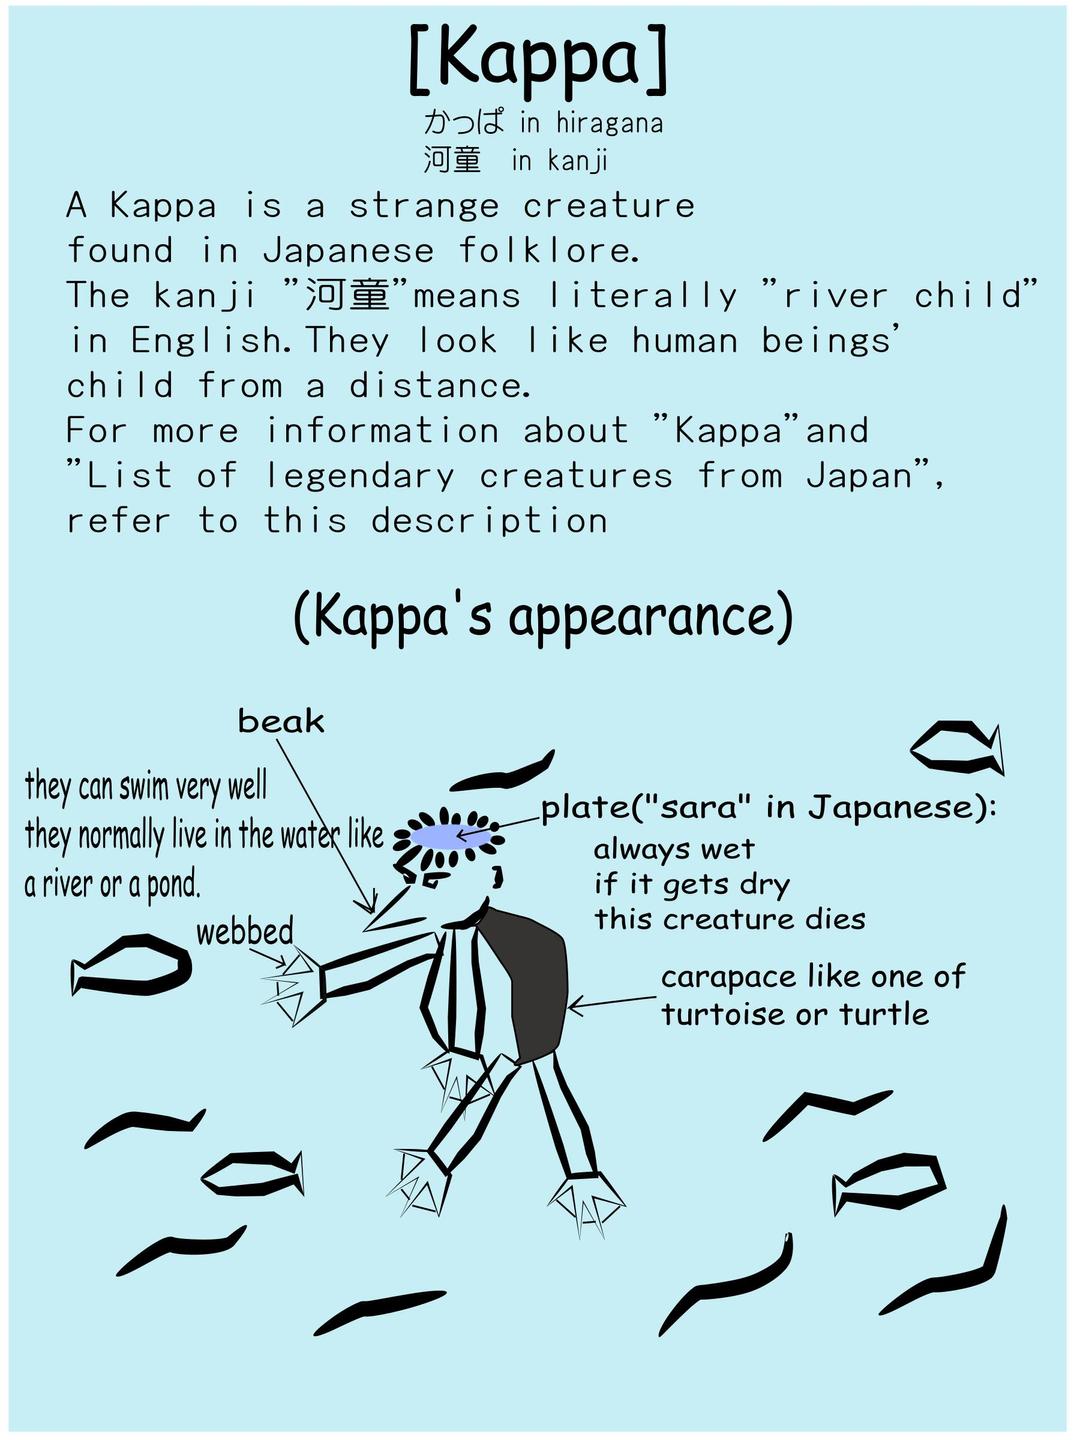 Kappa-Japanese folklore png transparent